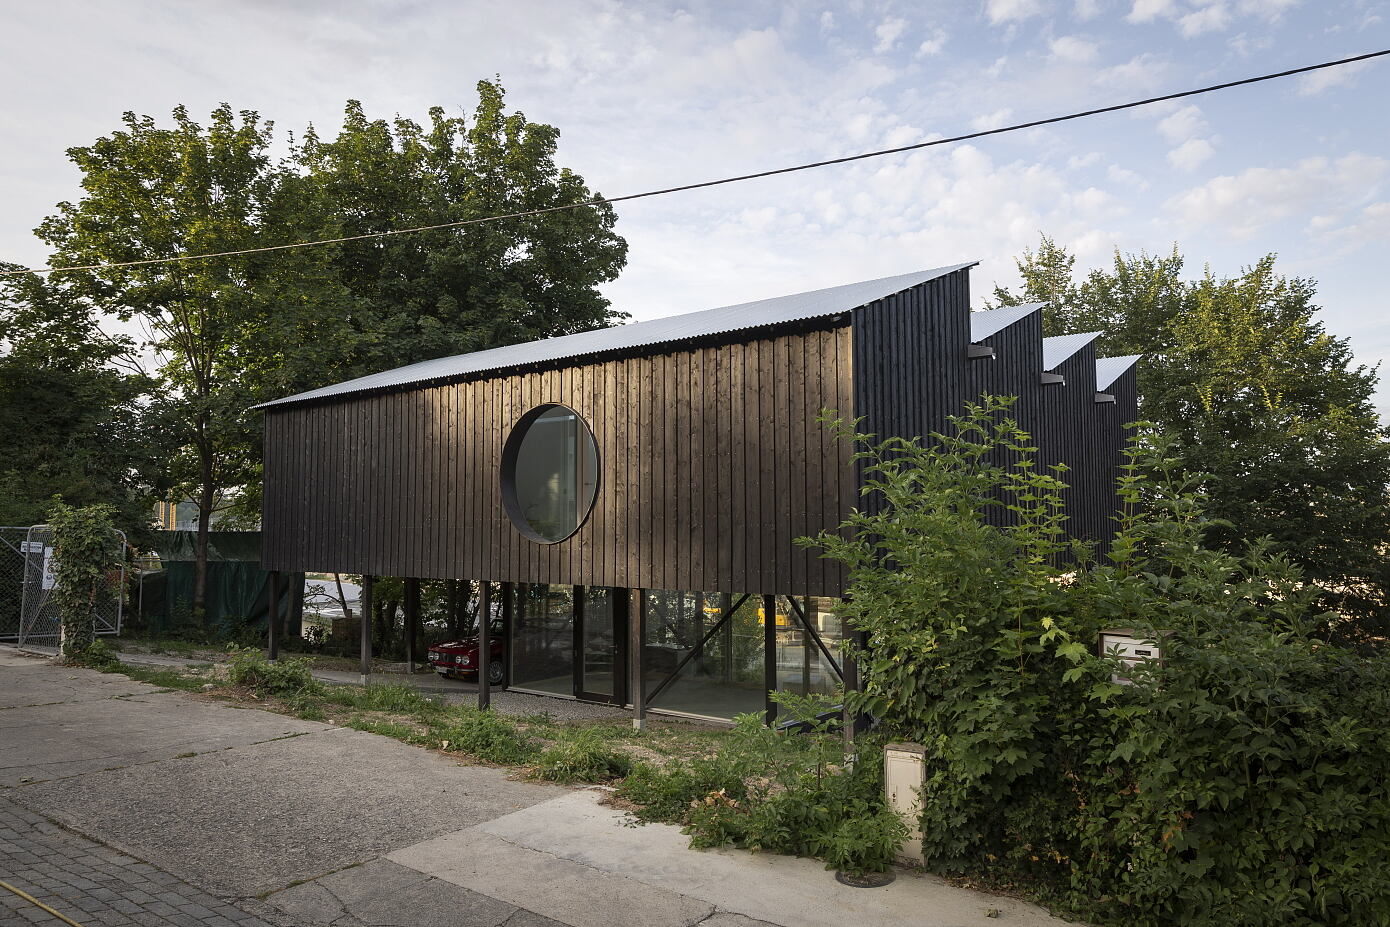 Casa CCFF by Leopold Banchini Architects